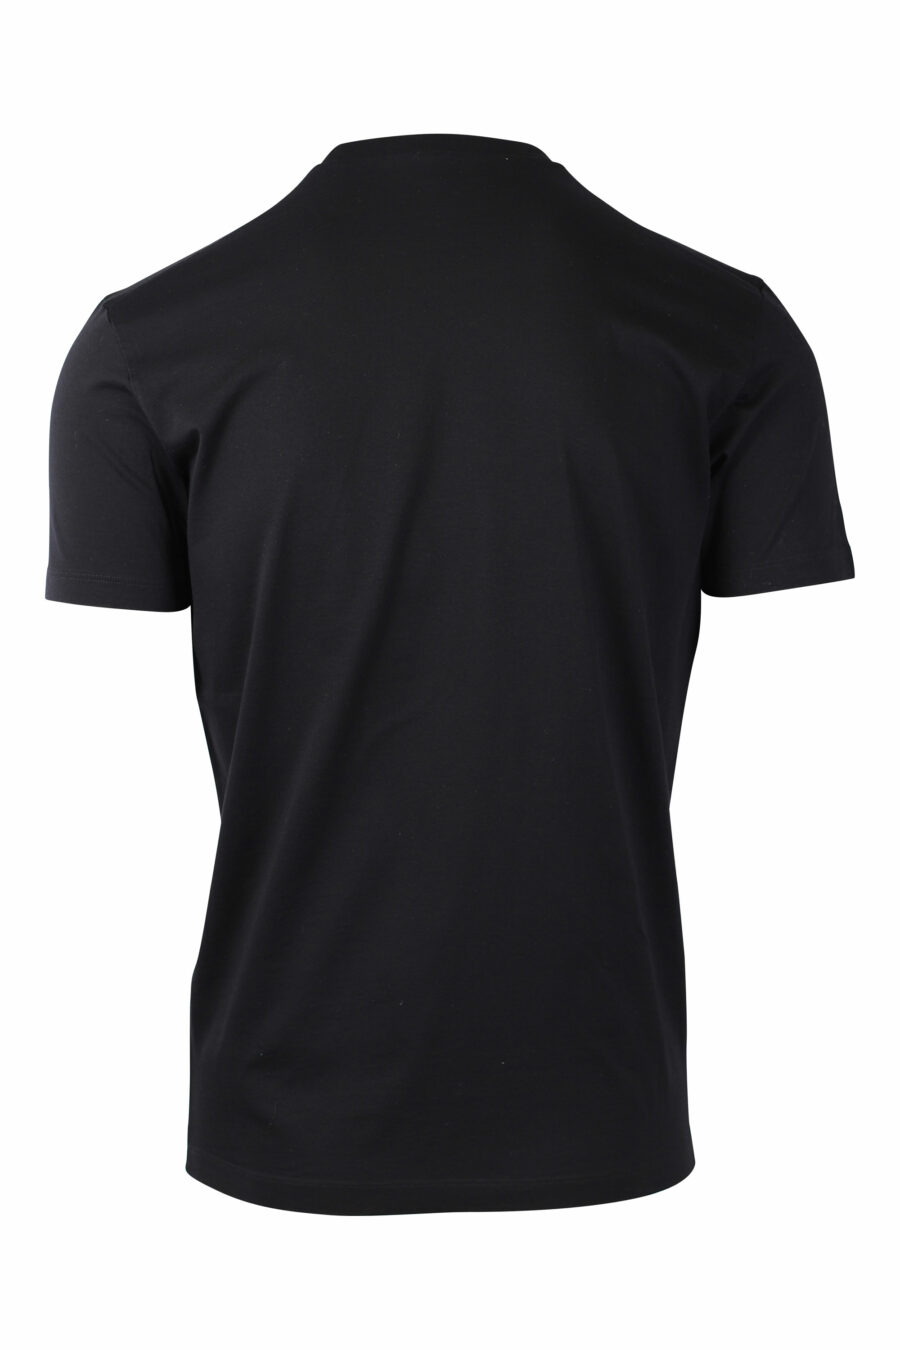 Schwarzes T-Shirt mit Maxilogo-Blatt-Surfen - IMG 1463